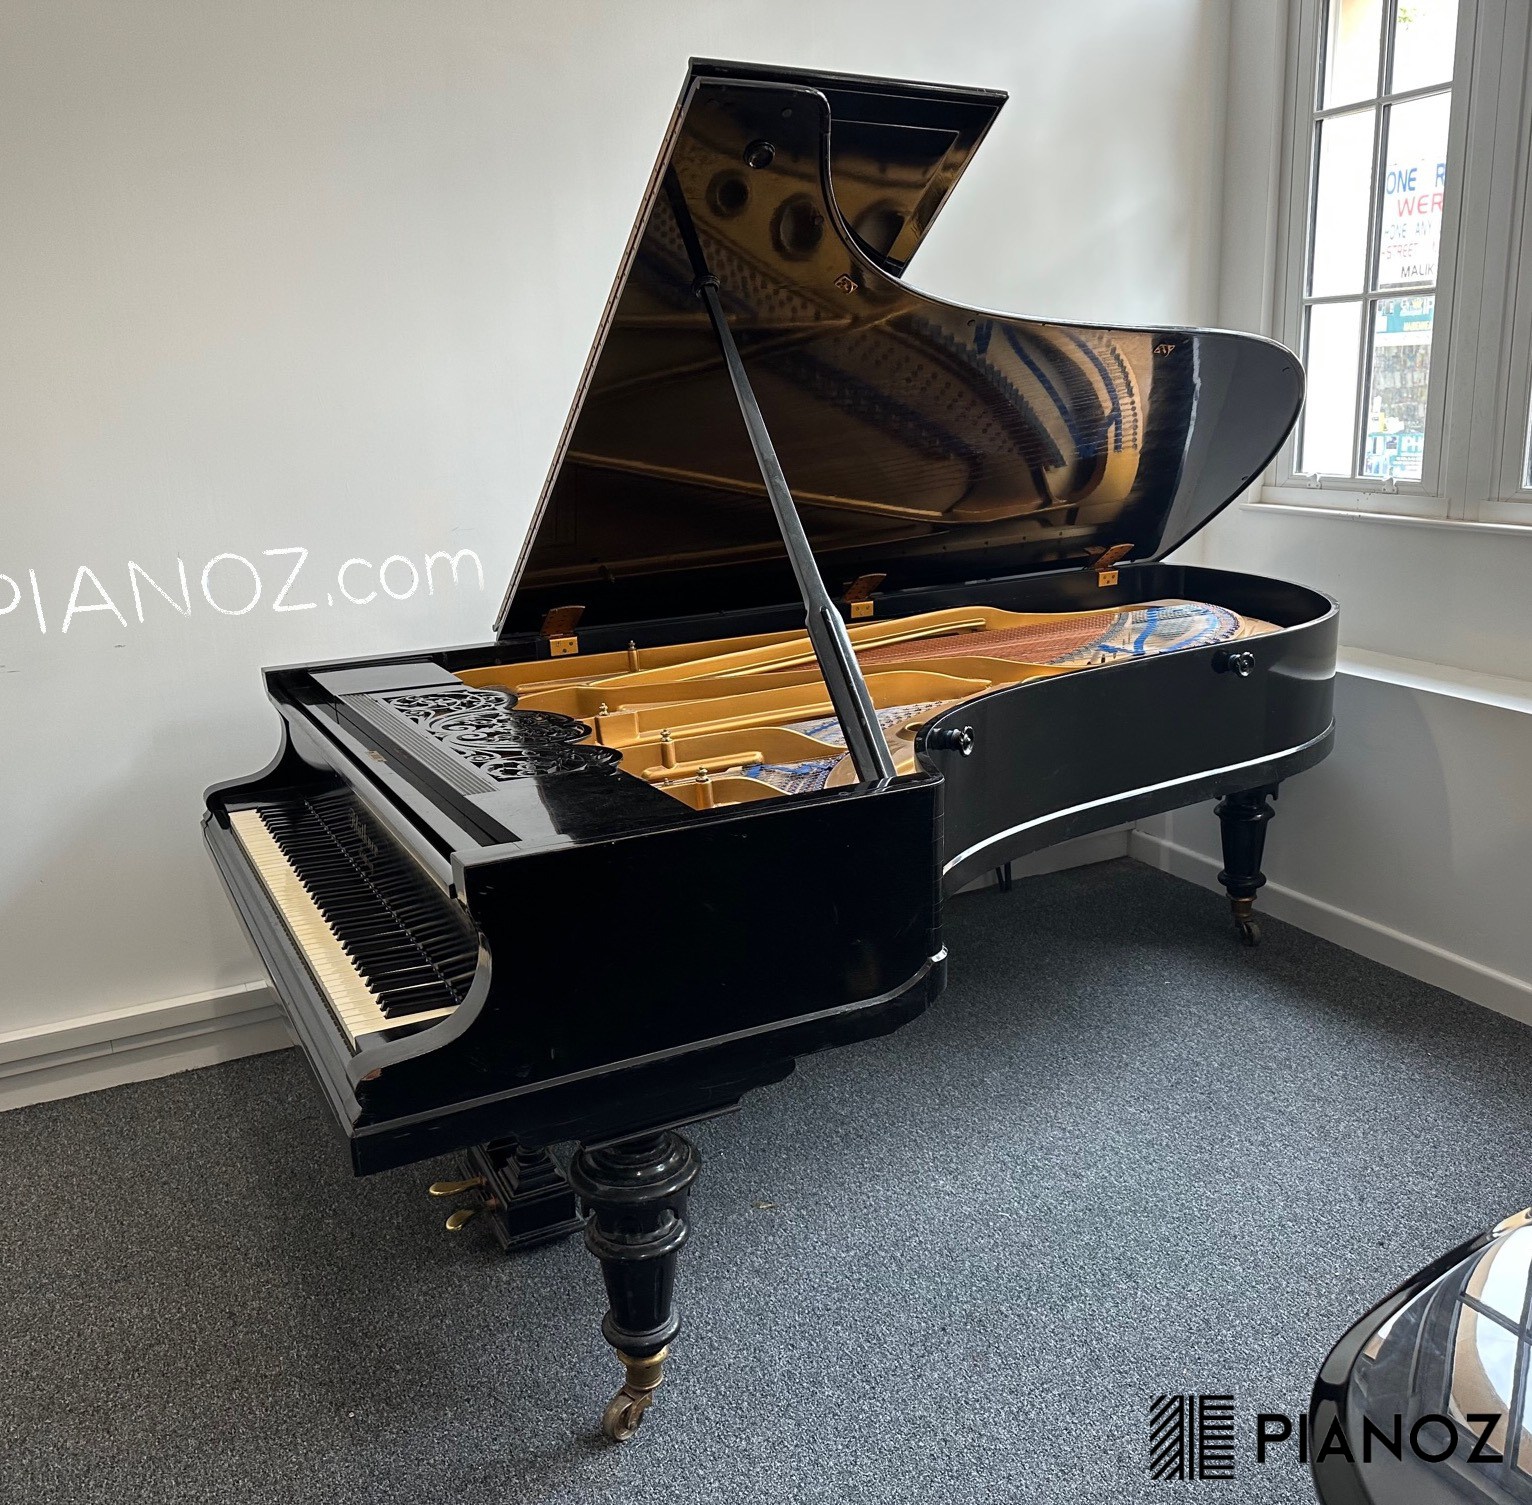 Bluthner Model 11 Concert Grand piano for sale in UK